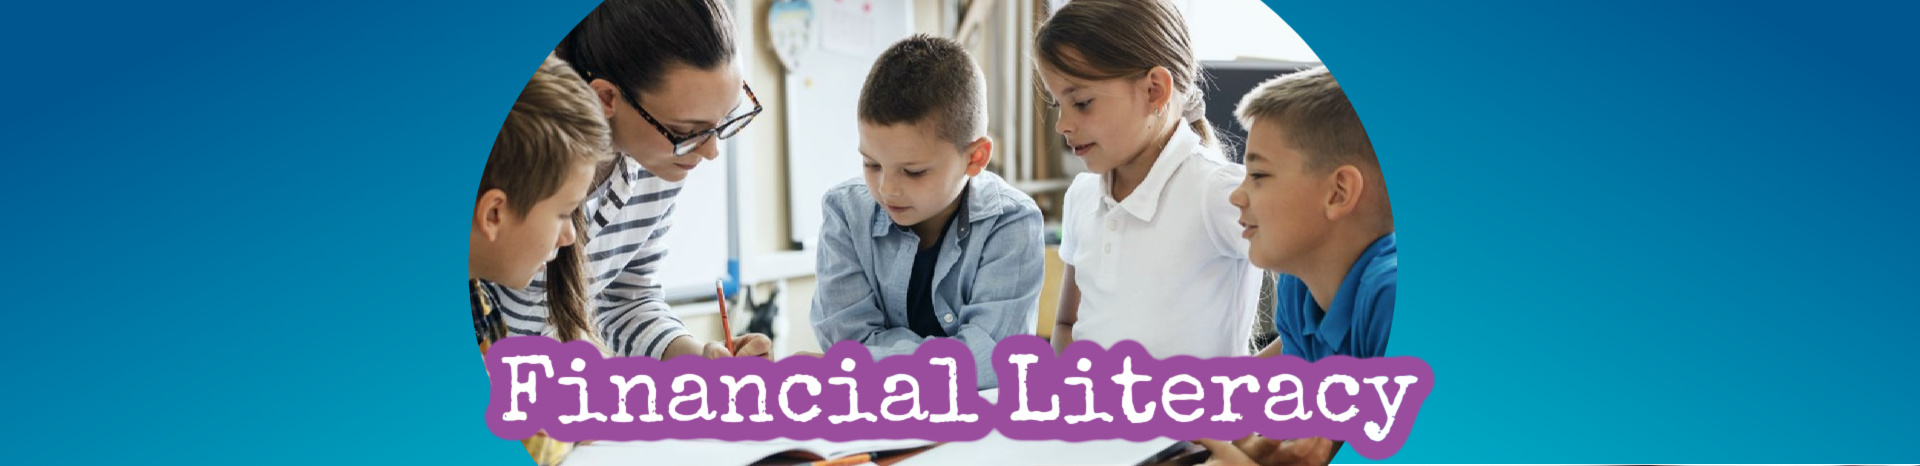 Financial Literacy Class image